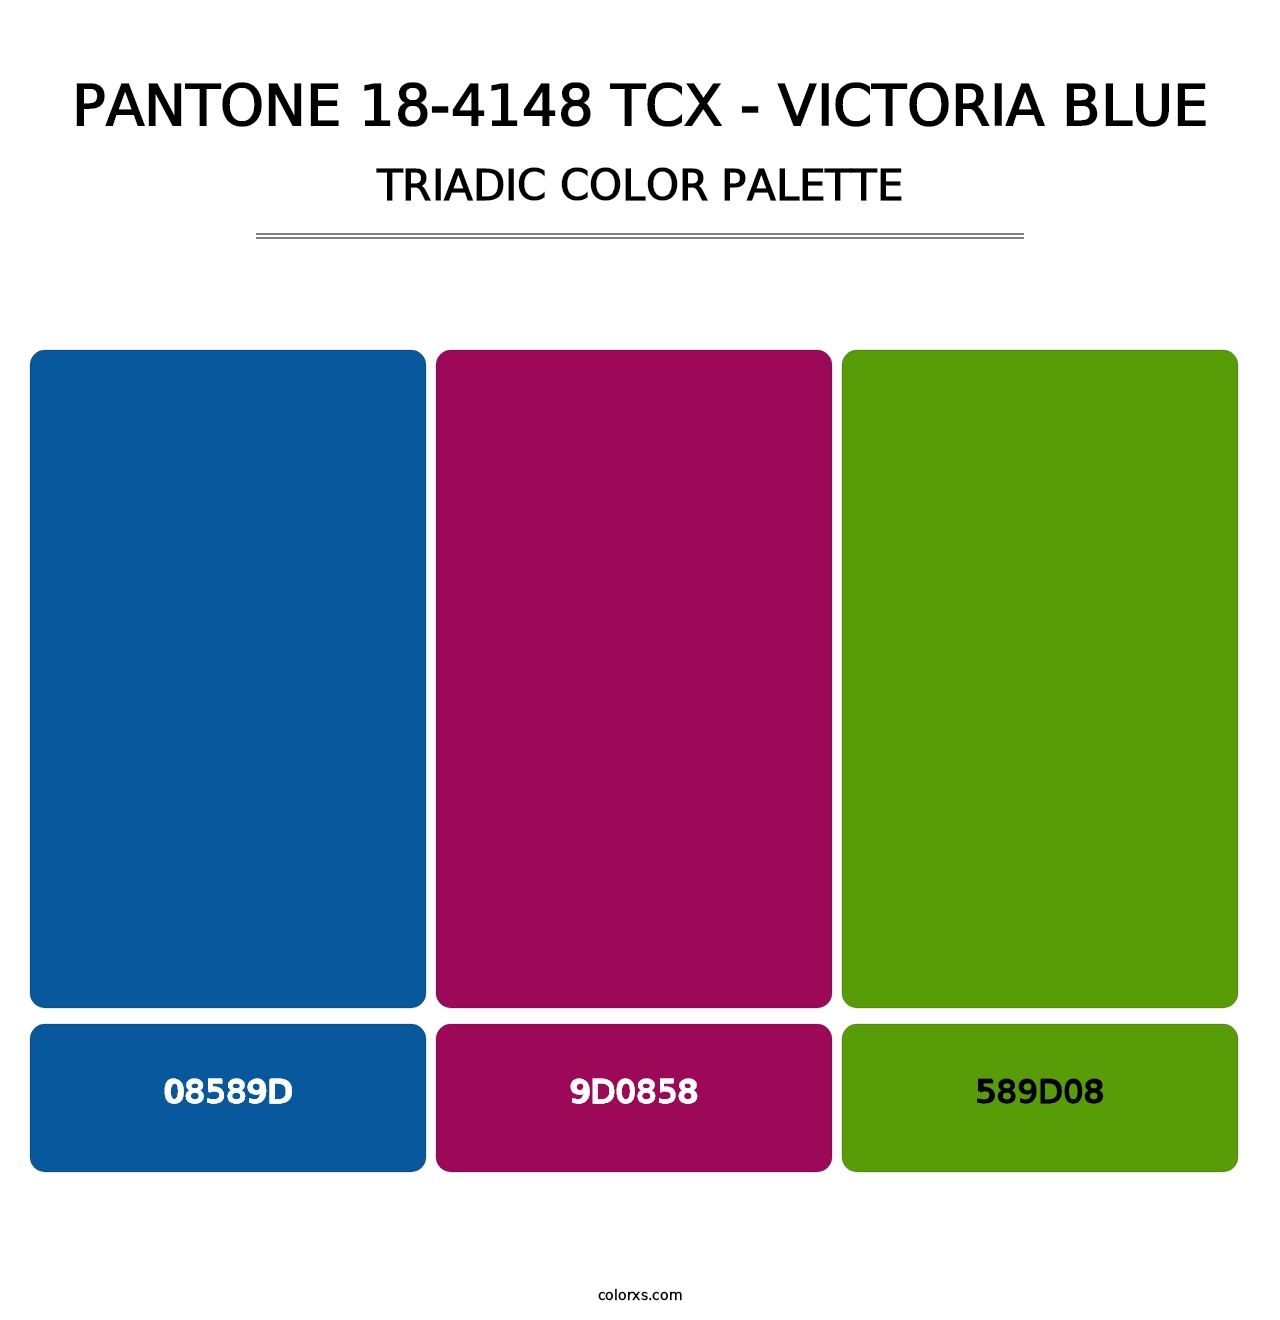 PANTONE 18-4148 TCX - Victoria Blue - Triadic Color Palette